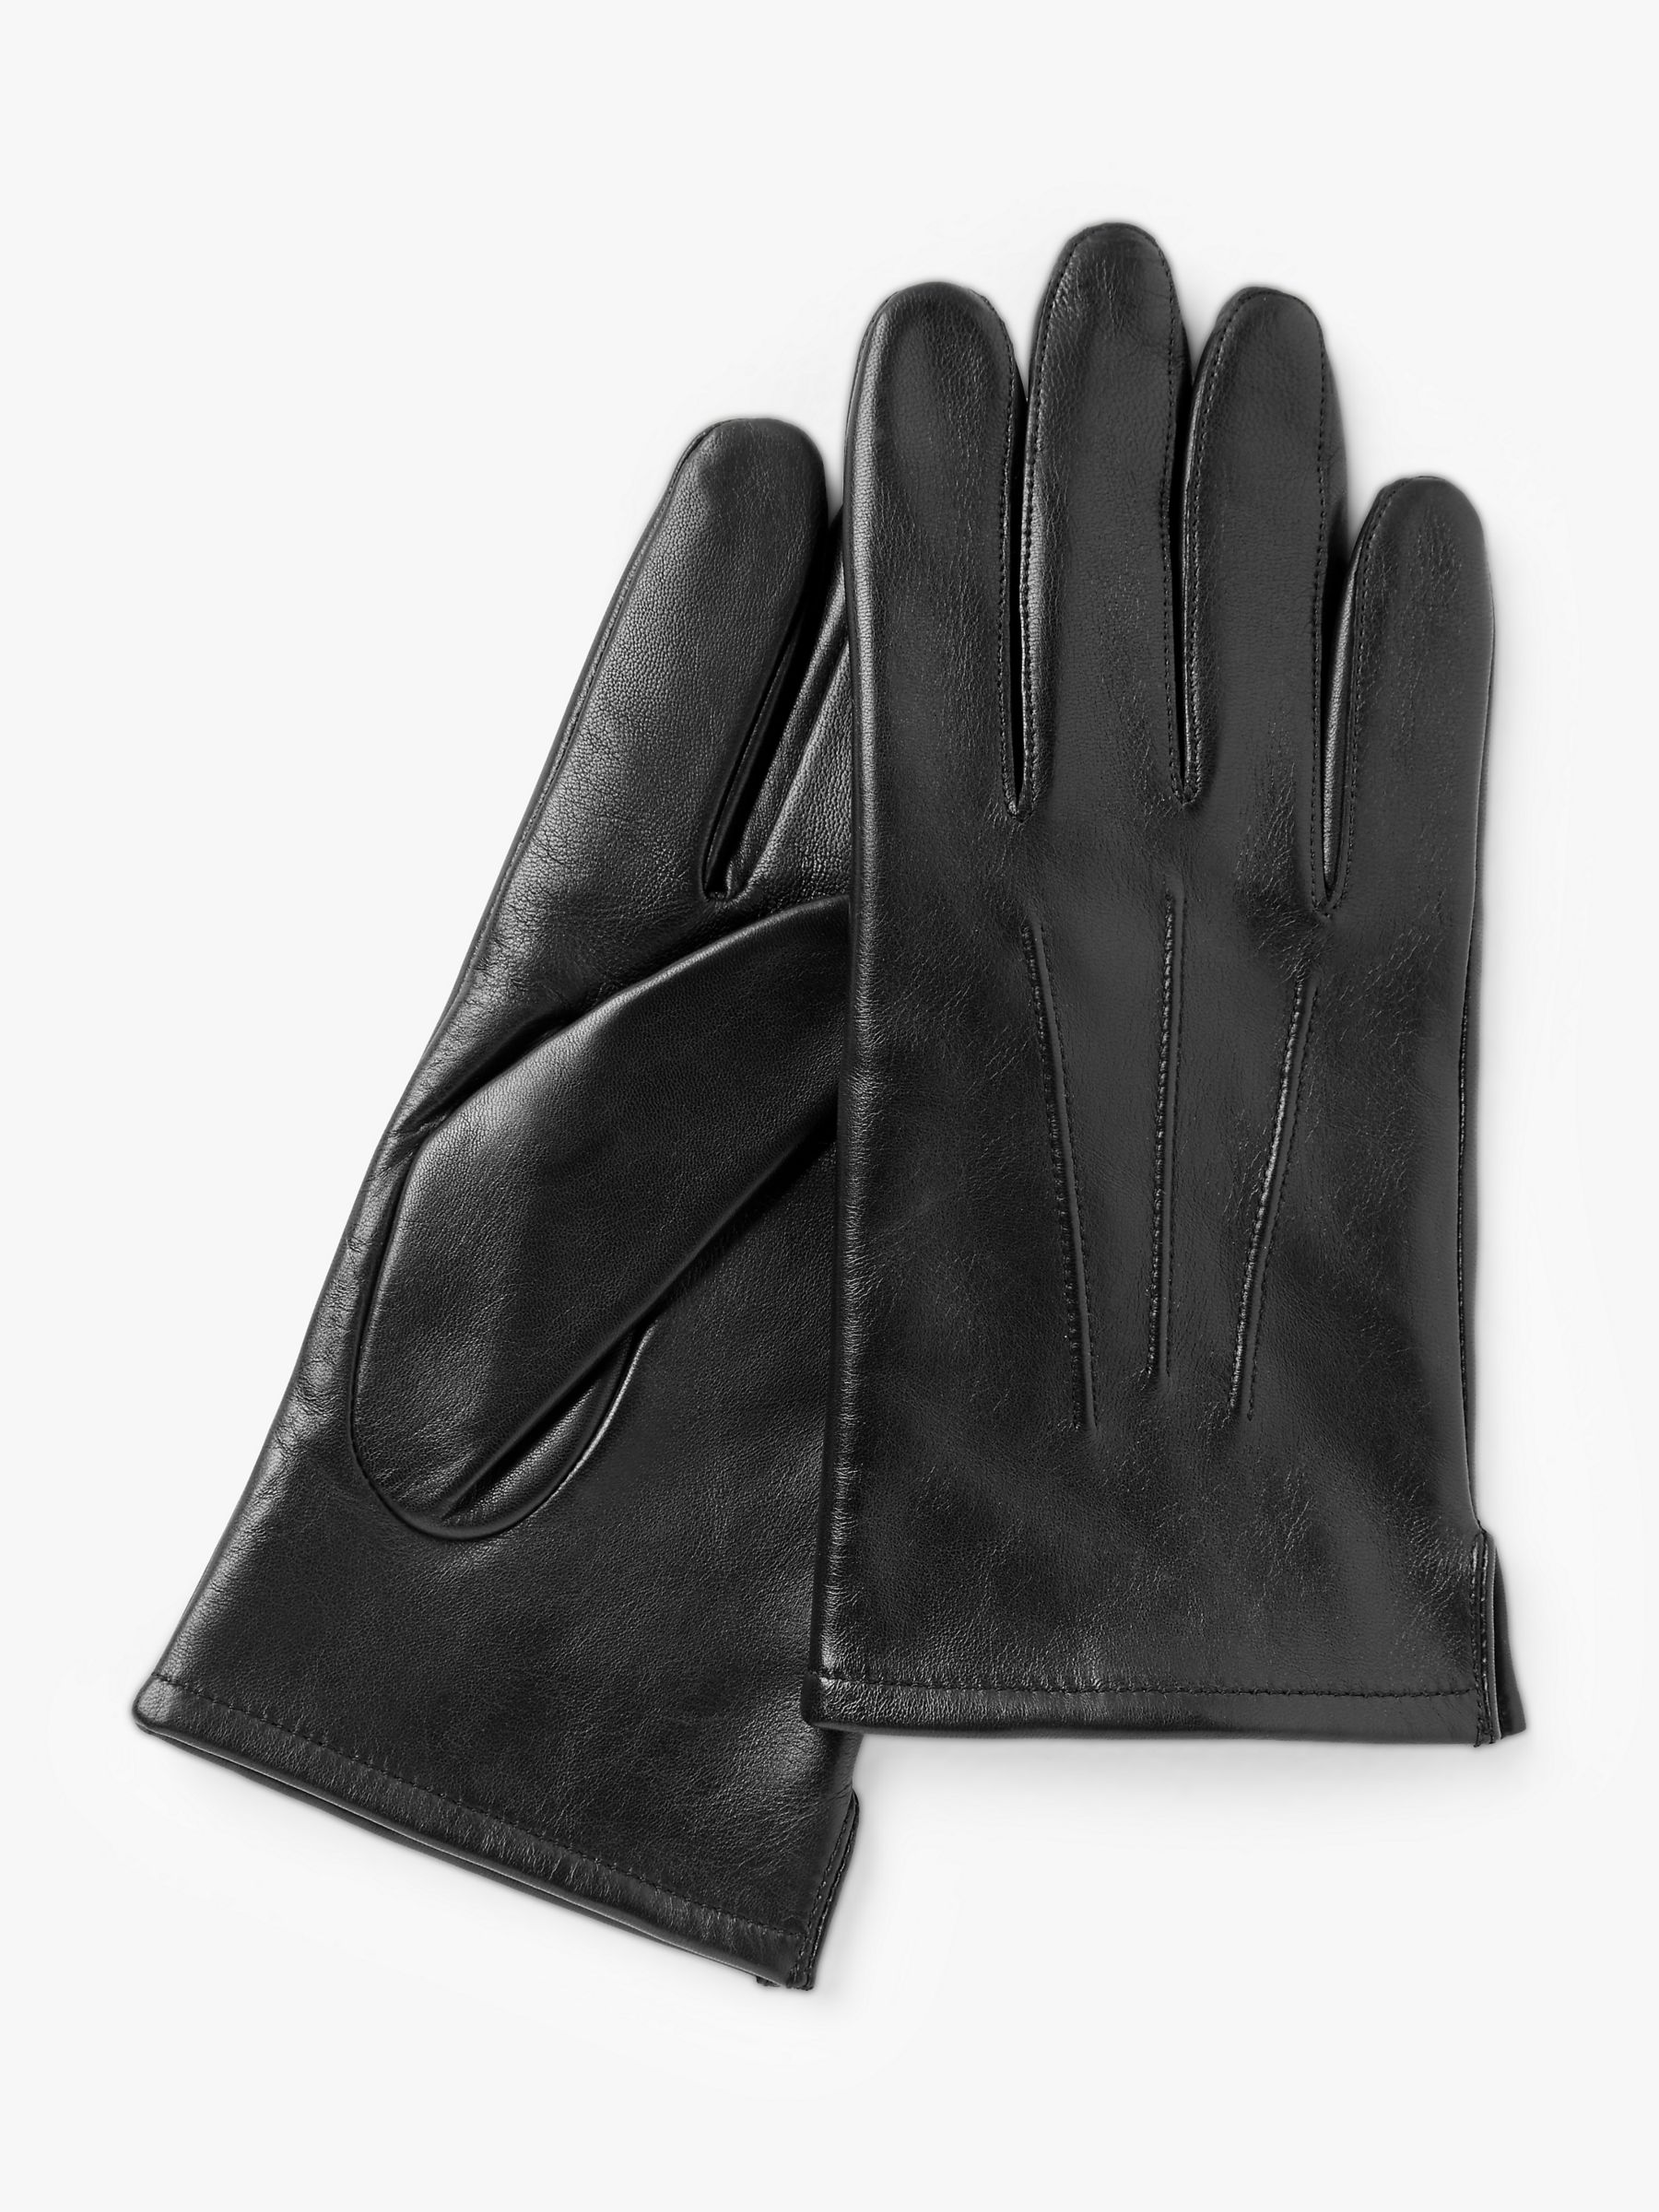 John Lewis Fleece Leather Gloves, Black, S